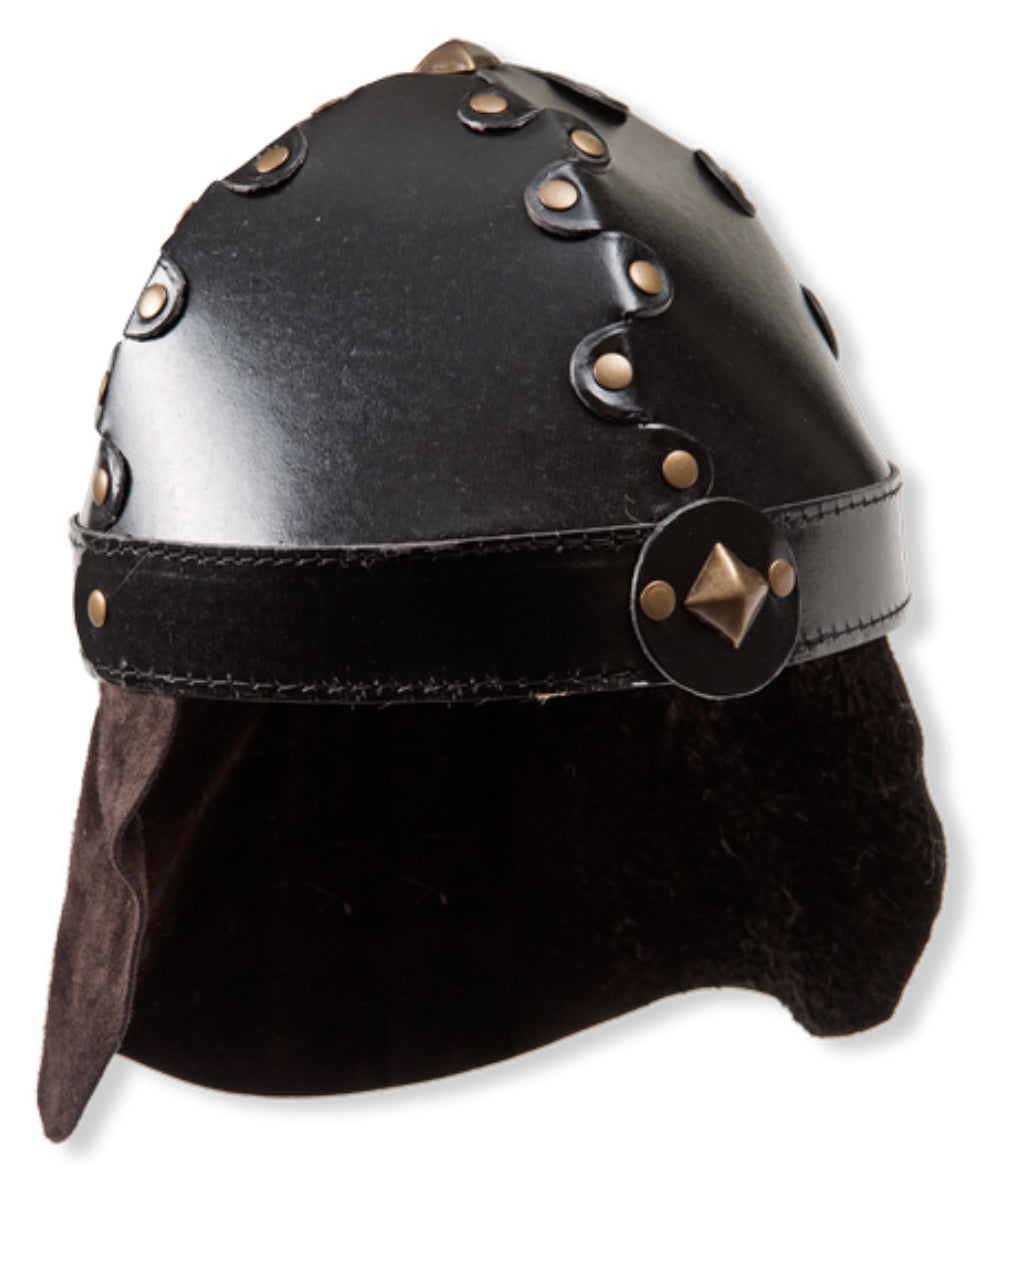 Medieval Knight’s Helmet for Kids - Alder & Alouette